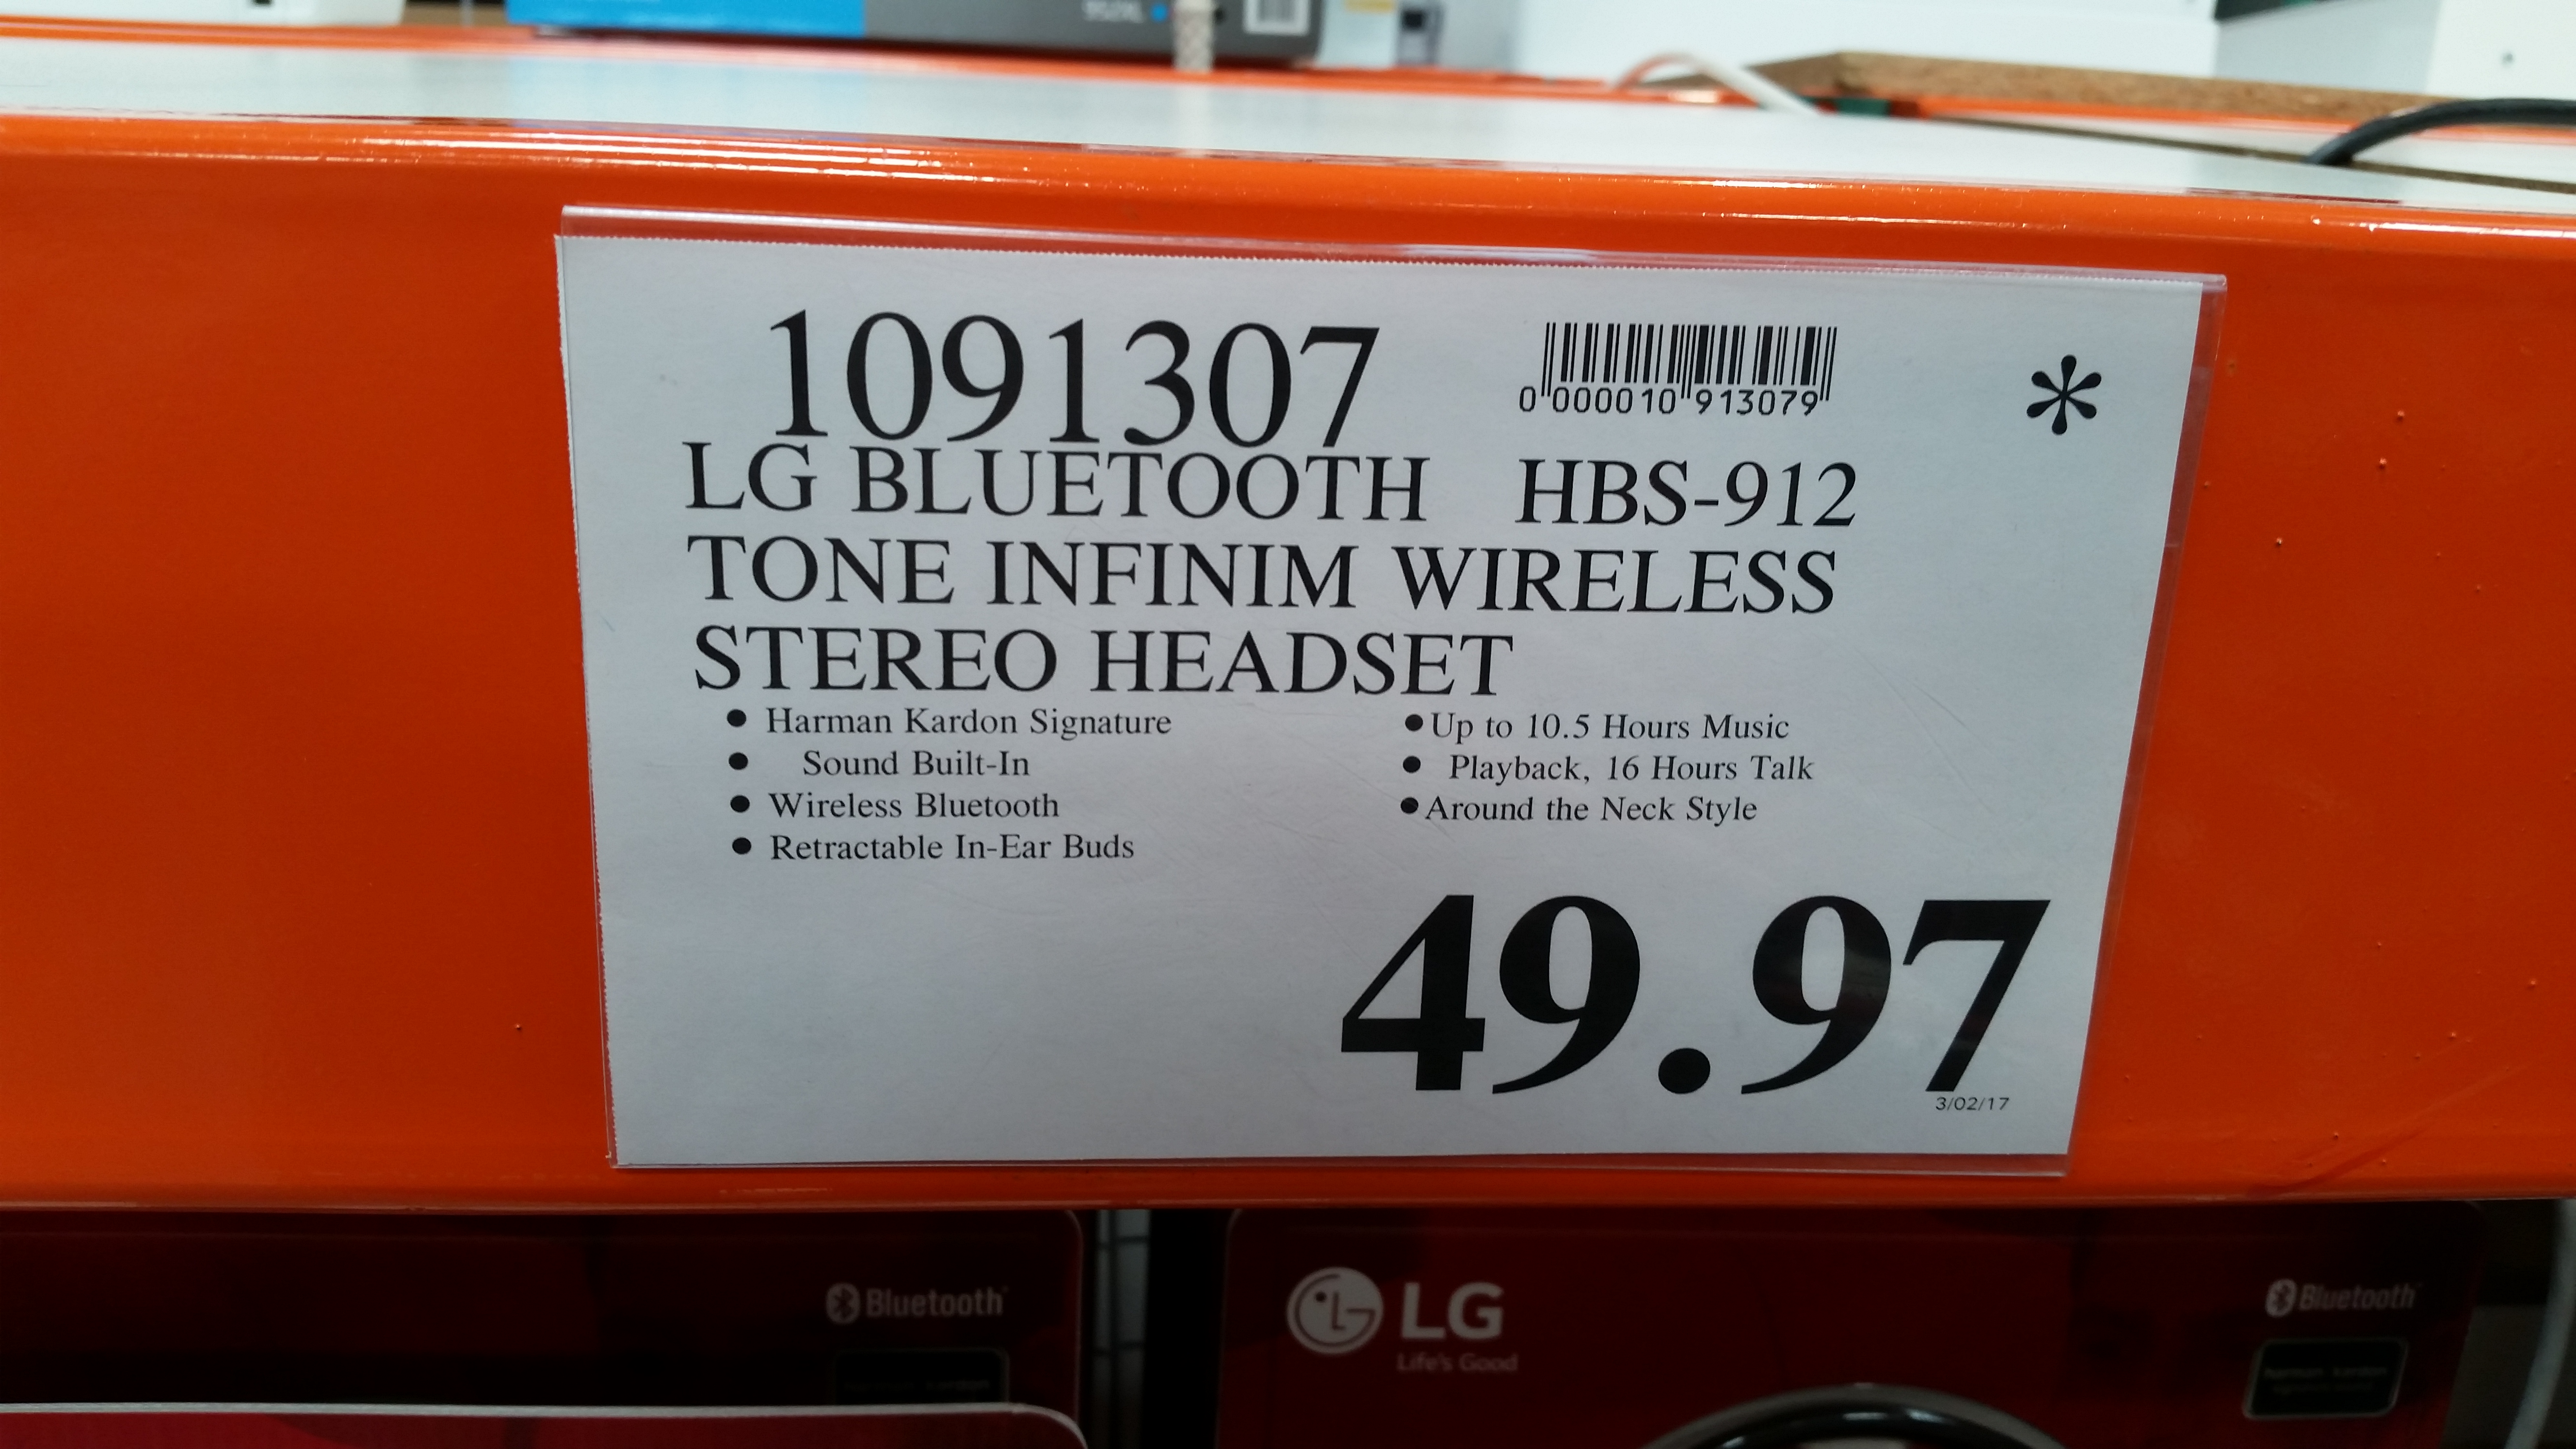 LG Tone Infinim HBS-912 $49.97($30 price drop) - Costco and Costco.com